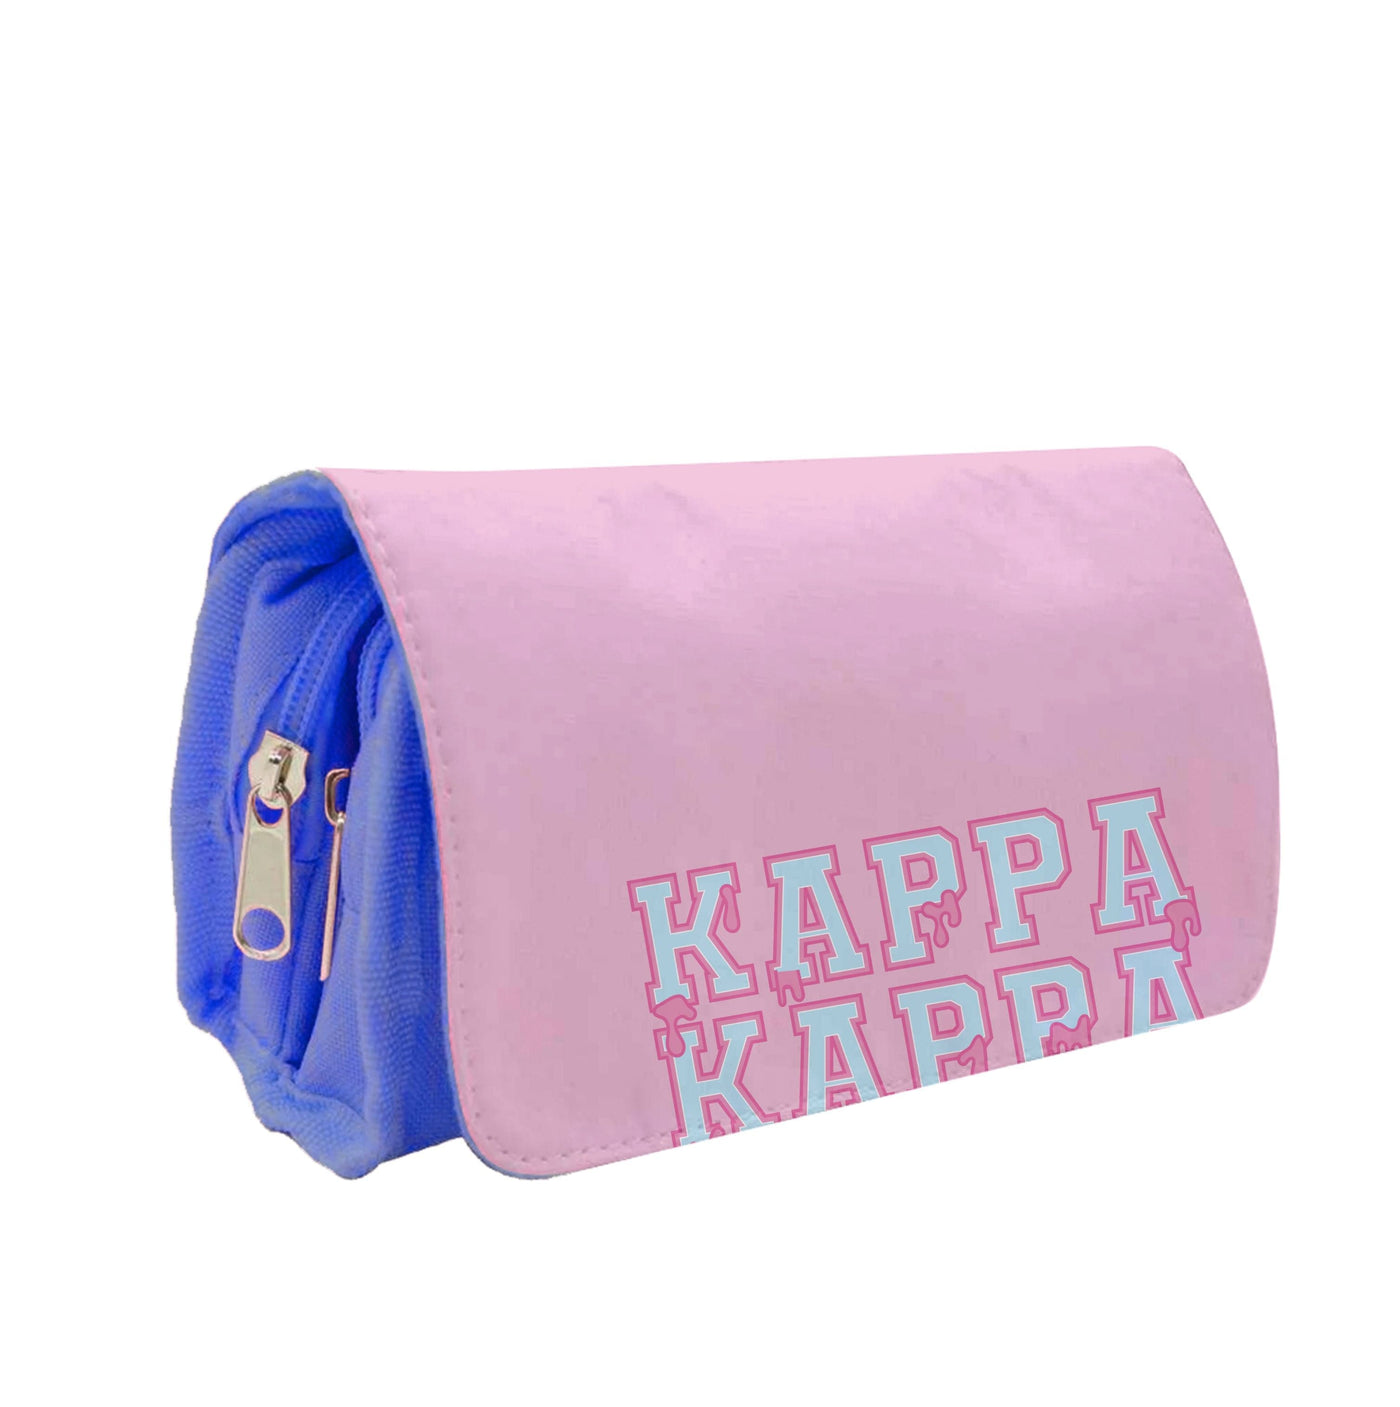 Kappa Kappa Tau - Scream Queens Pencil Case